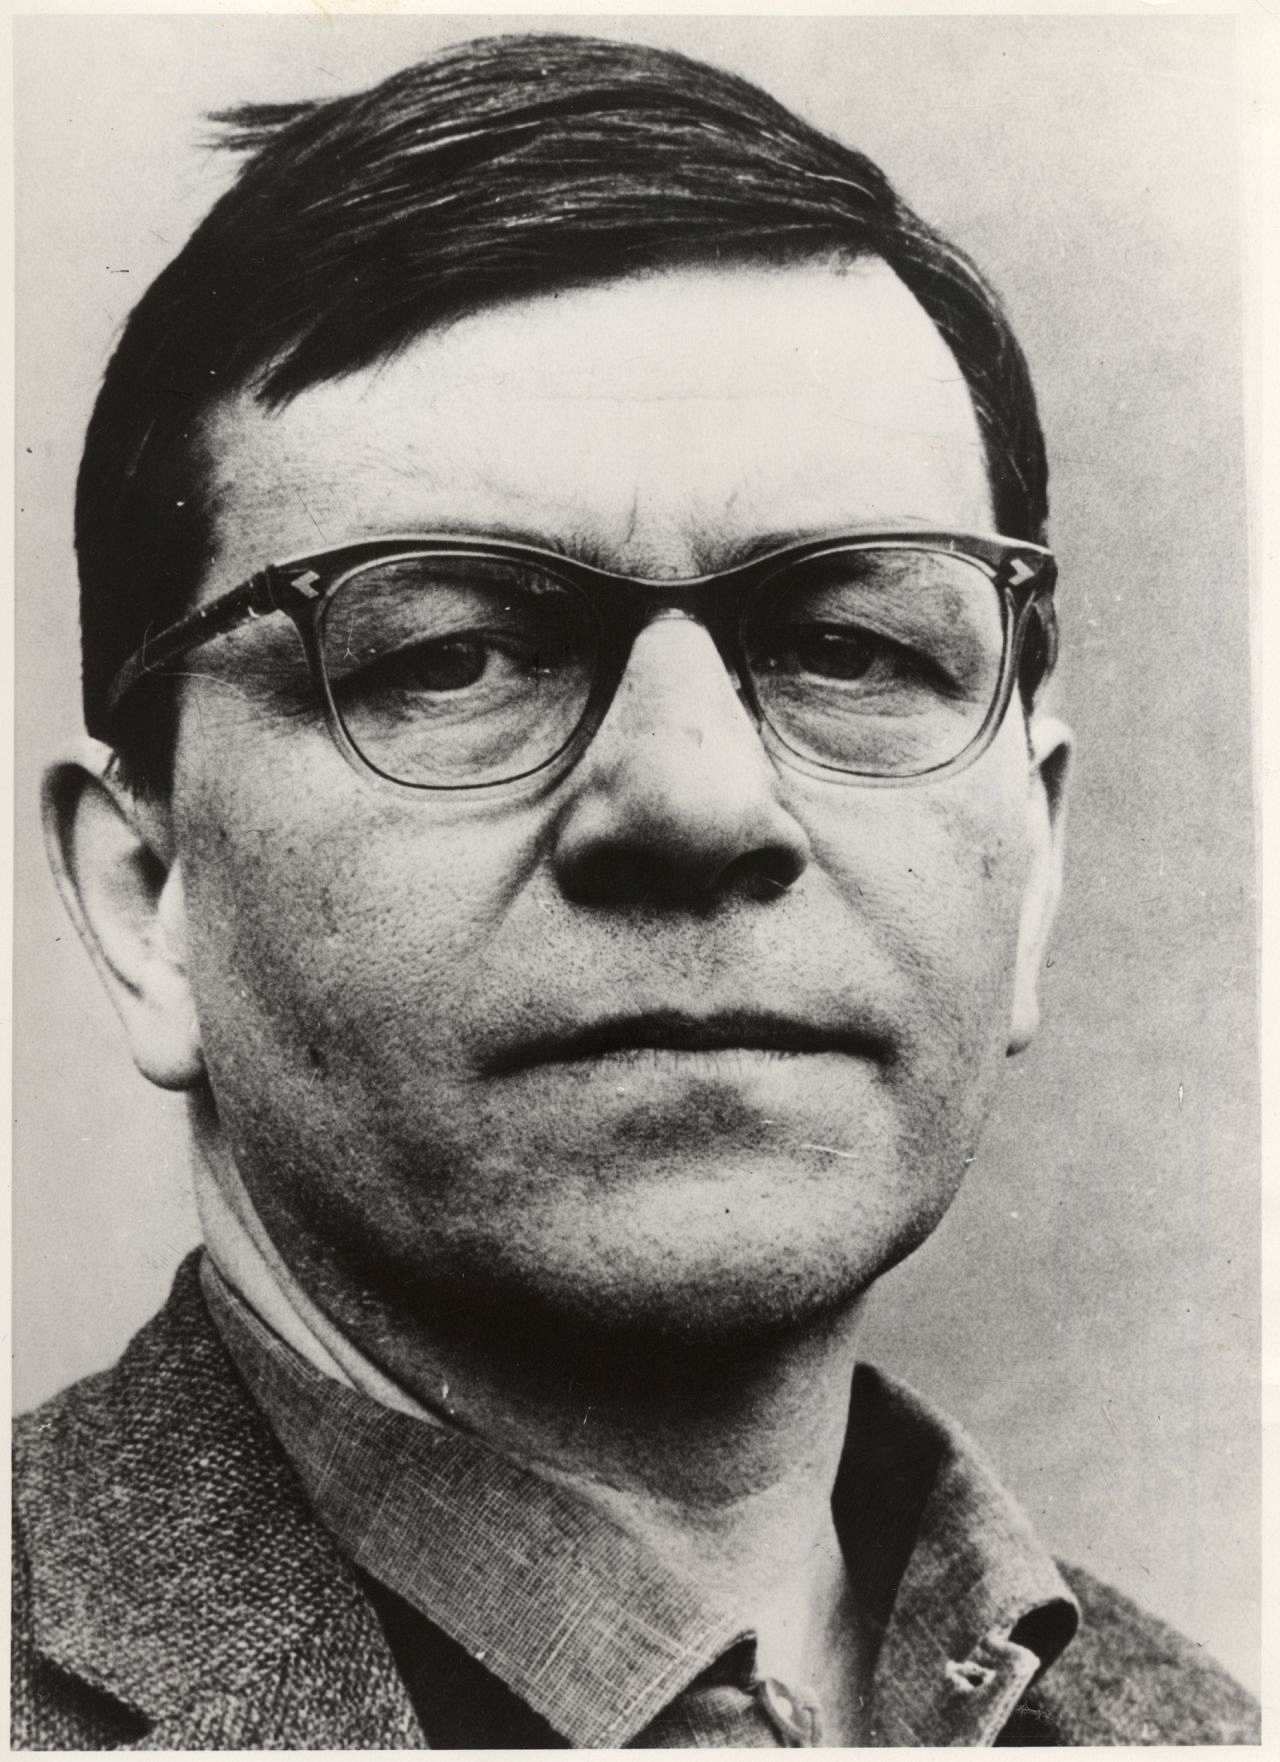 Porträtfotografie des Schriftstellers Peter Weiss, 1960er Jahre.